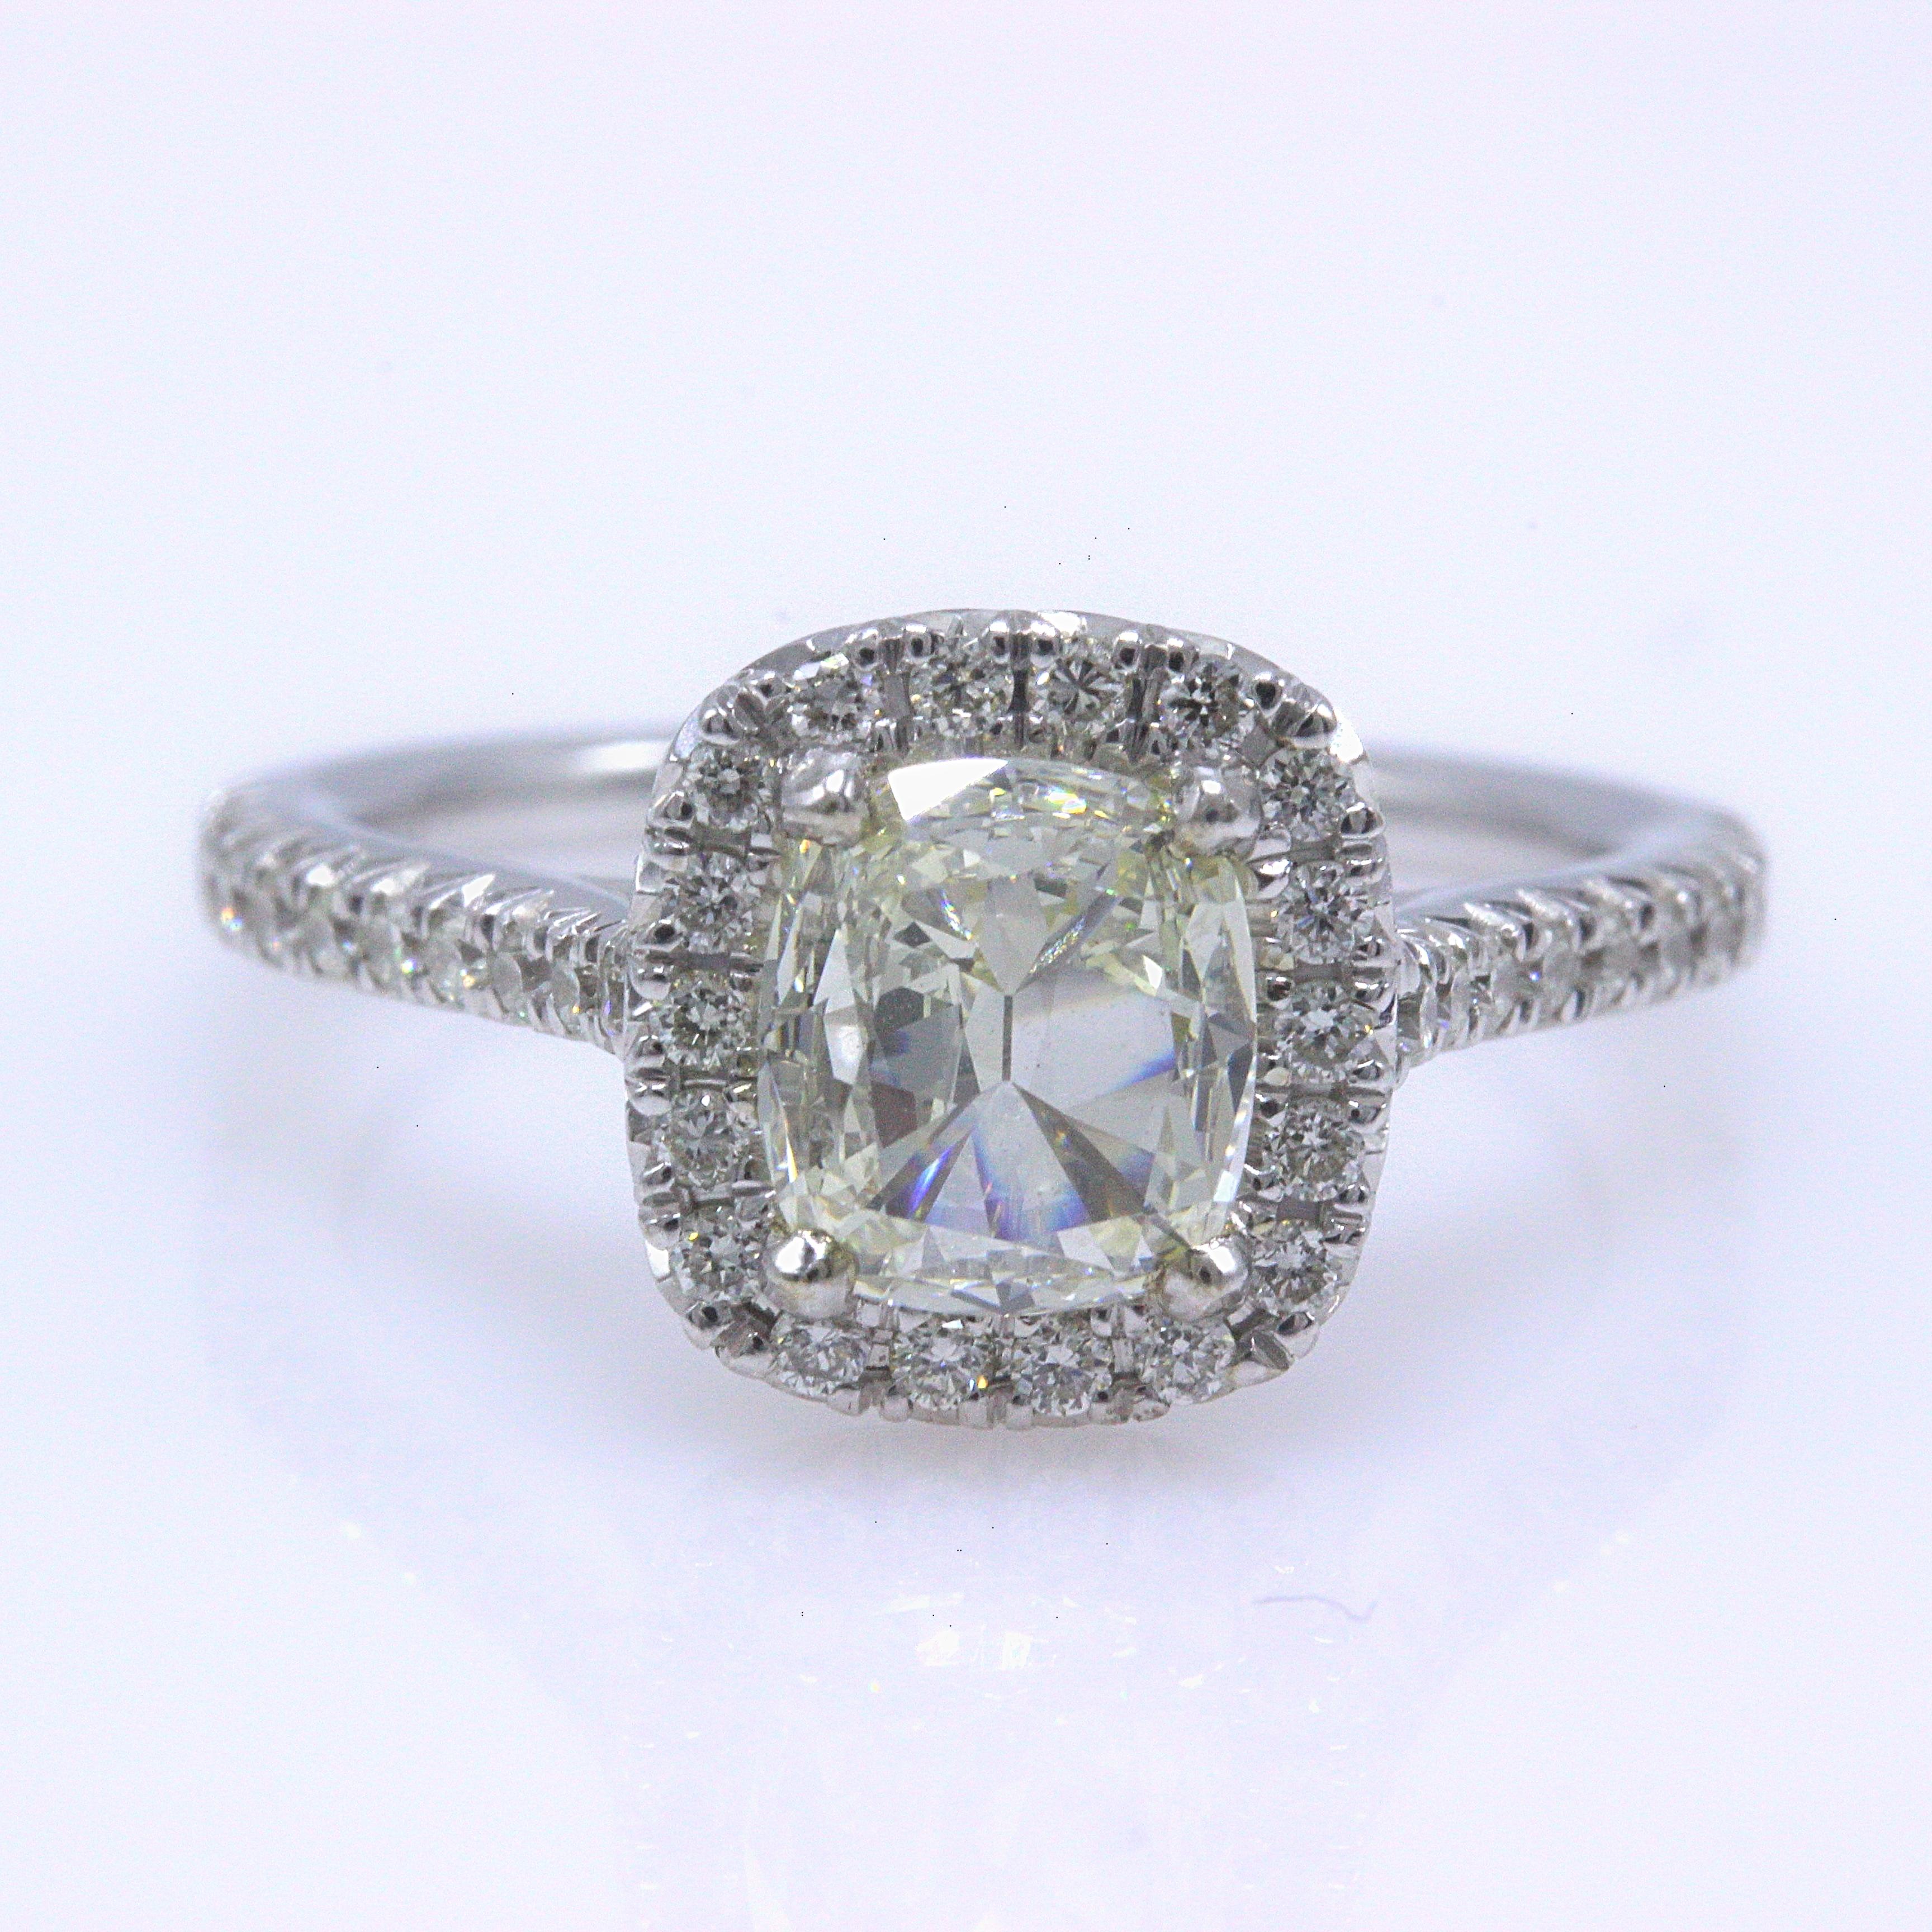 HENRI DAUSSI

Style:  Halo Diamond Engagement Ring with Diamond Band
Metal:  14K White Gold
Size:  4.25 - Sizable
Total Carat Weight:  1.13 TCW
Diamond Shape:  Cushion Cut Diamond 0.80 CTS 
Diamond Color & Clarity:  J / SI1
Accent Diamonds:  0.33